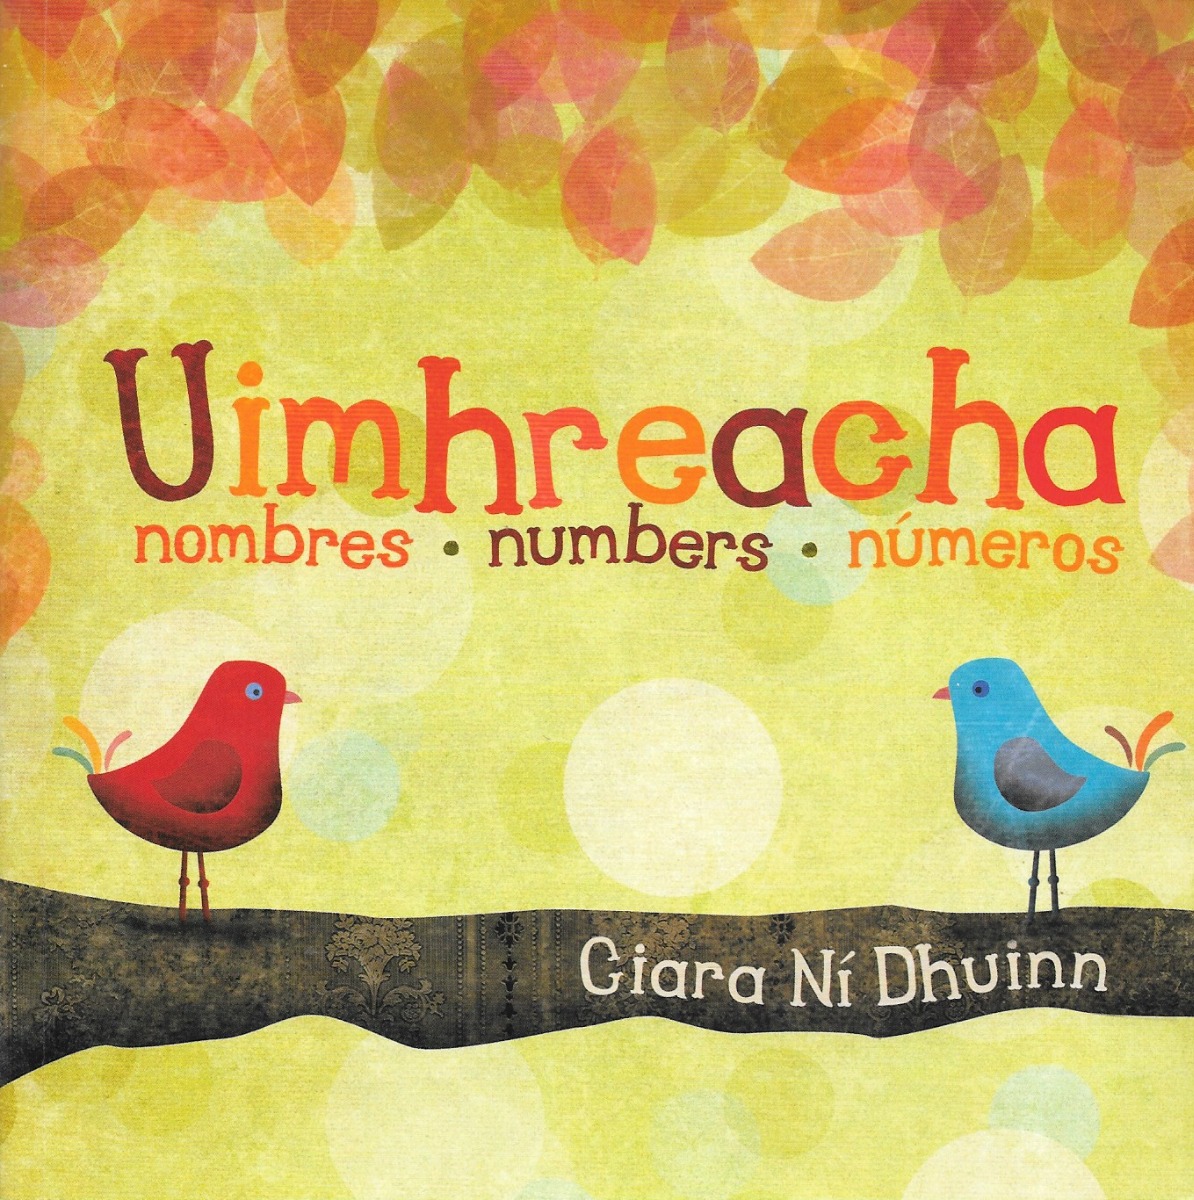 Uimhreacha (nombres, numbers, números)